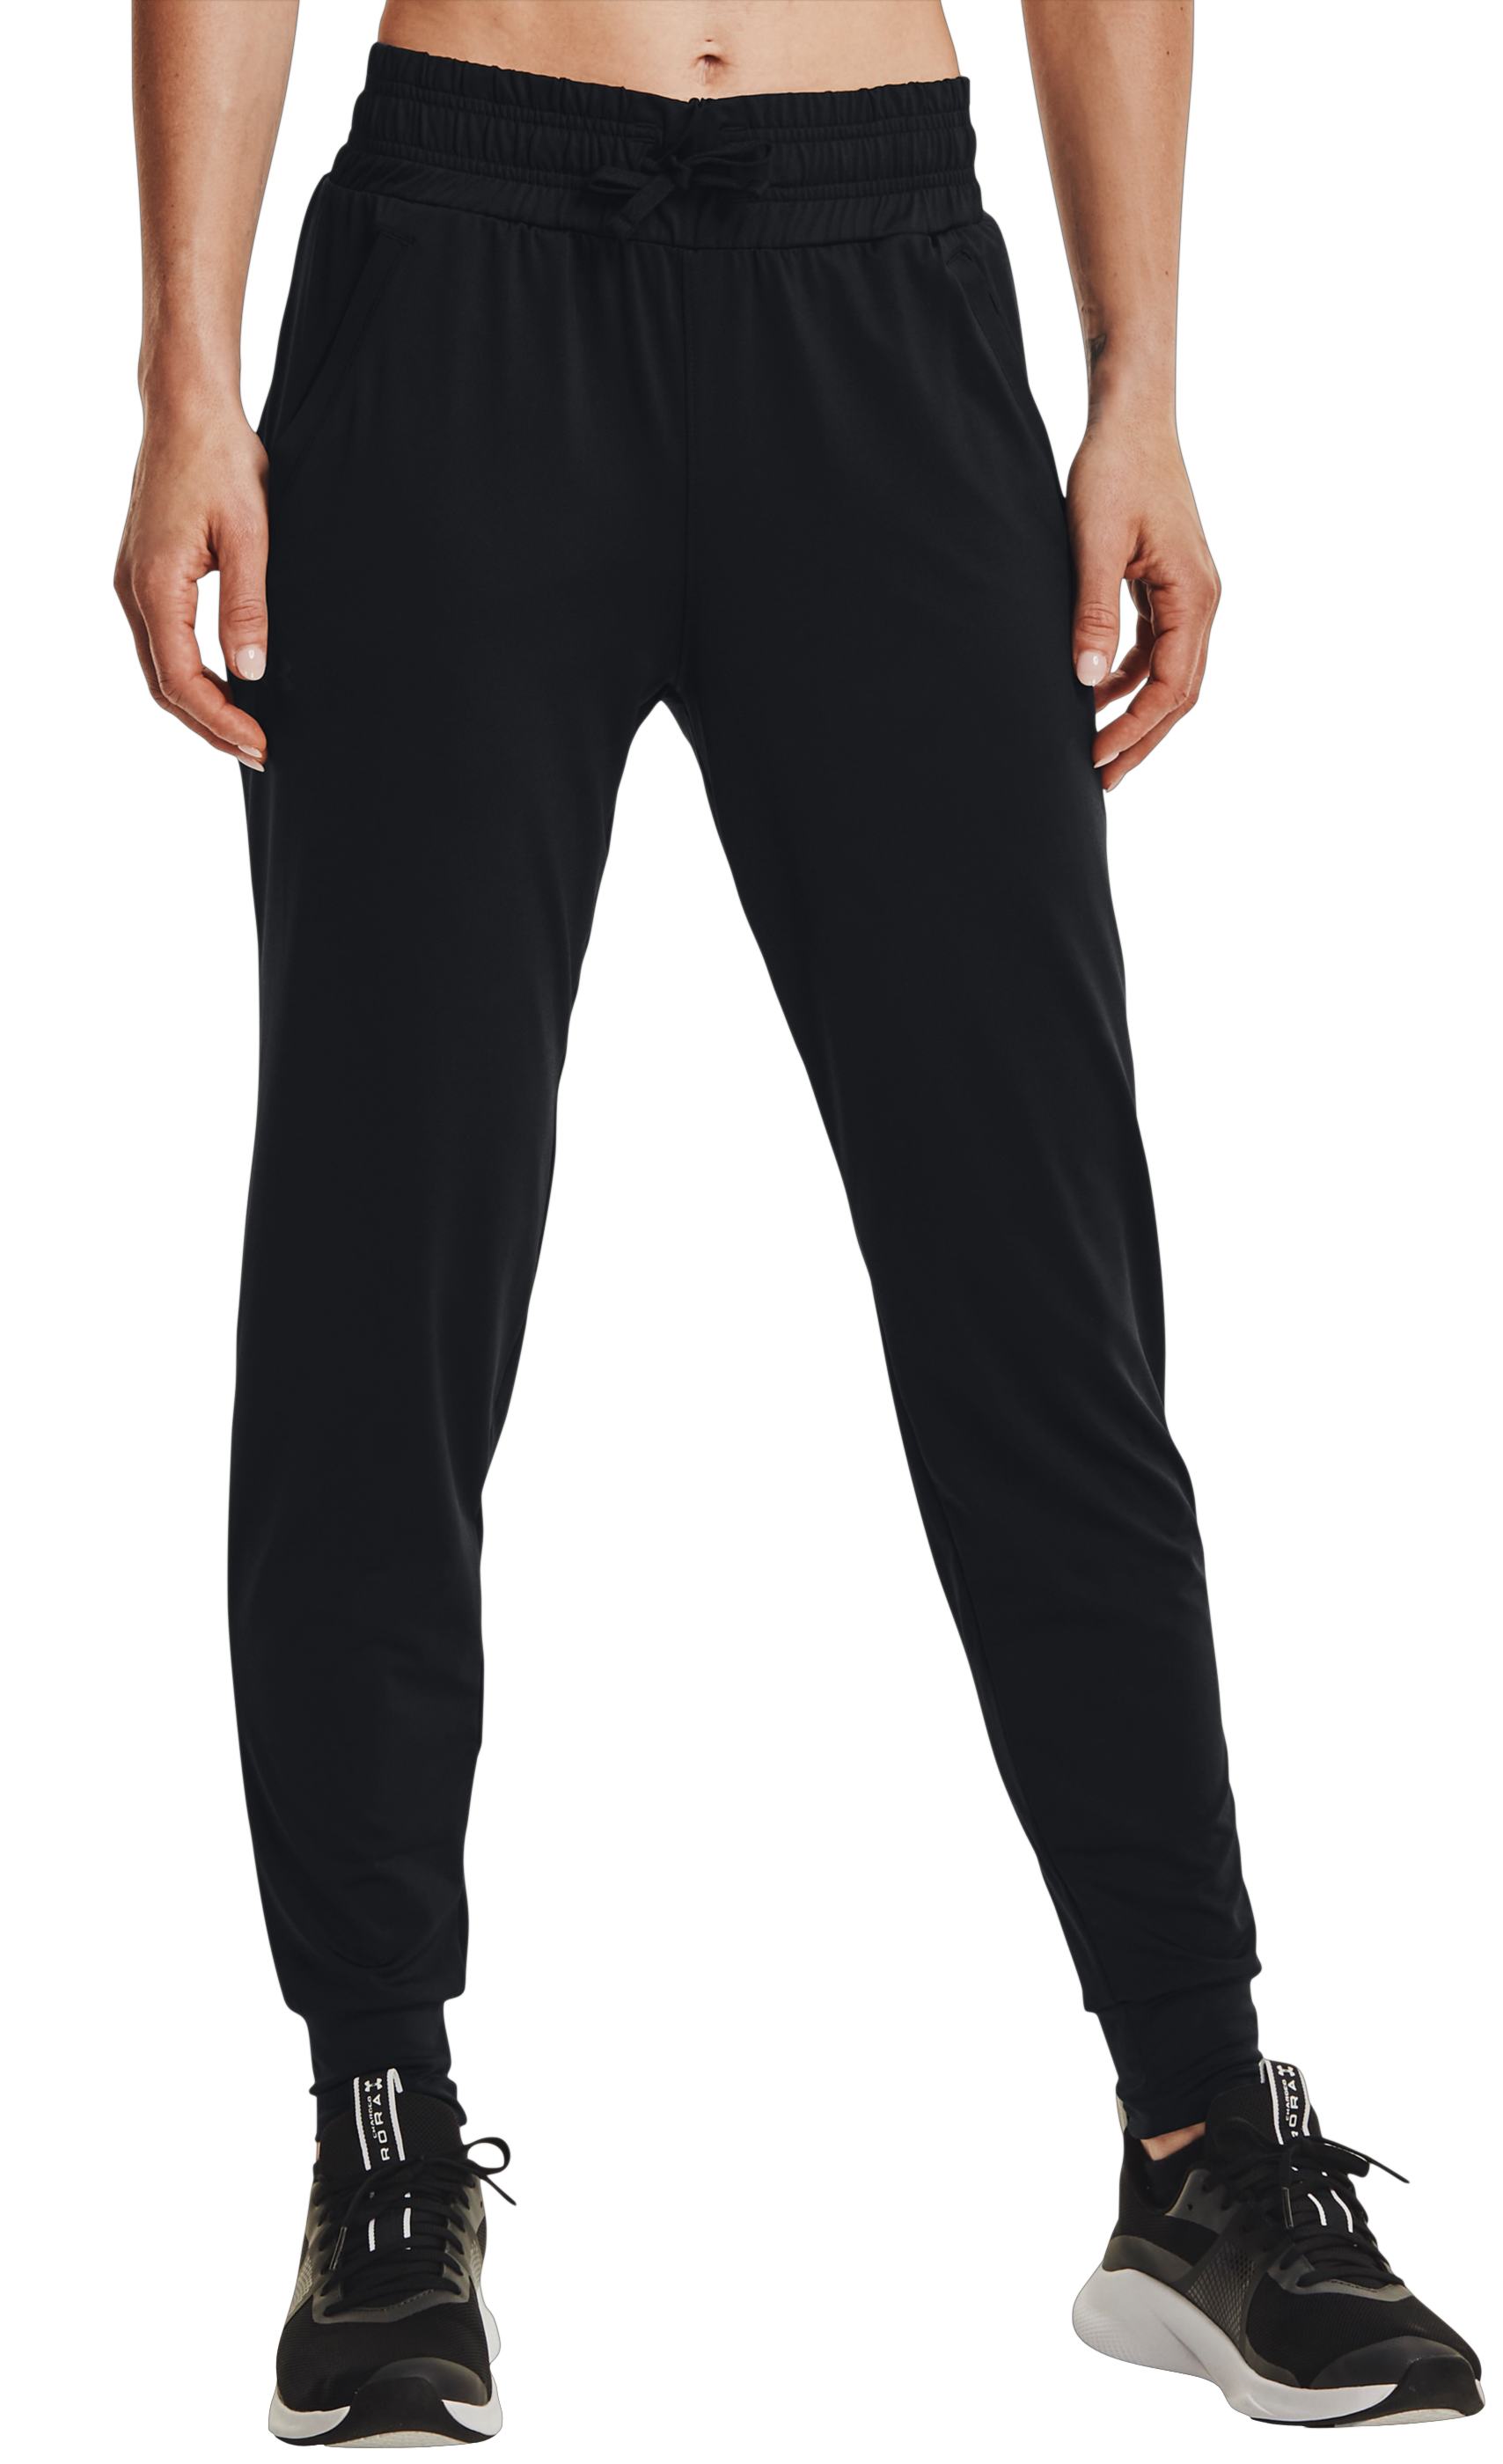 Under Armour HeatGear Armour Pants for Ladies - Black/Jet Gray - XL - Short